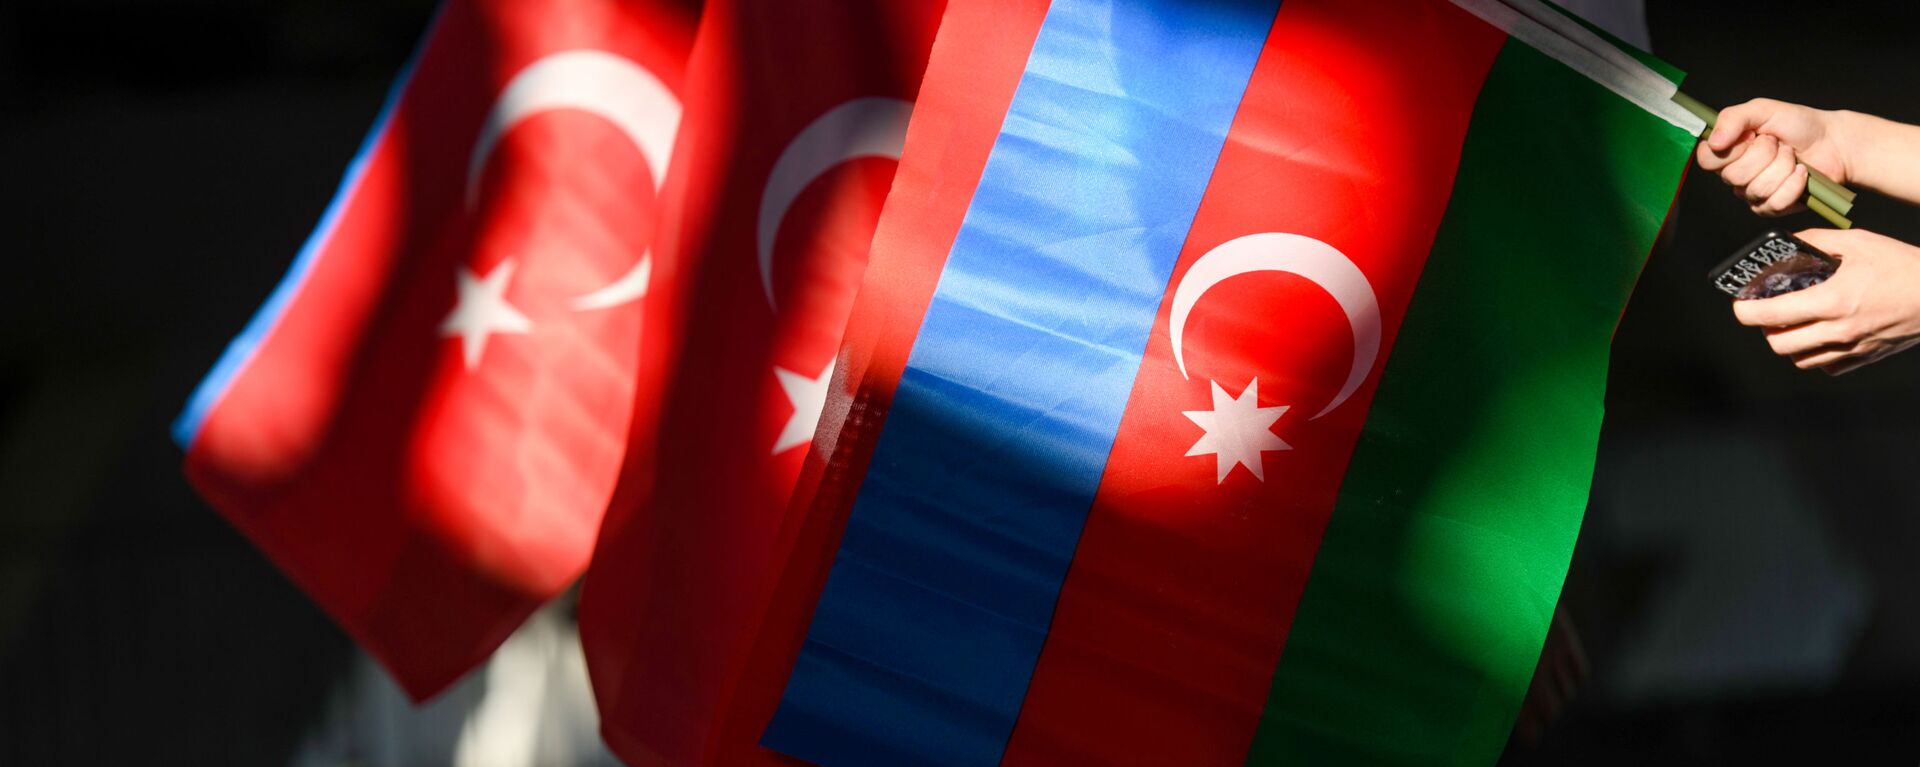 Флаги Азербайджана и Турции - Sputnik Азербайджан, 1920, 29.10.2021